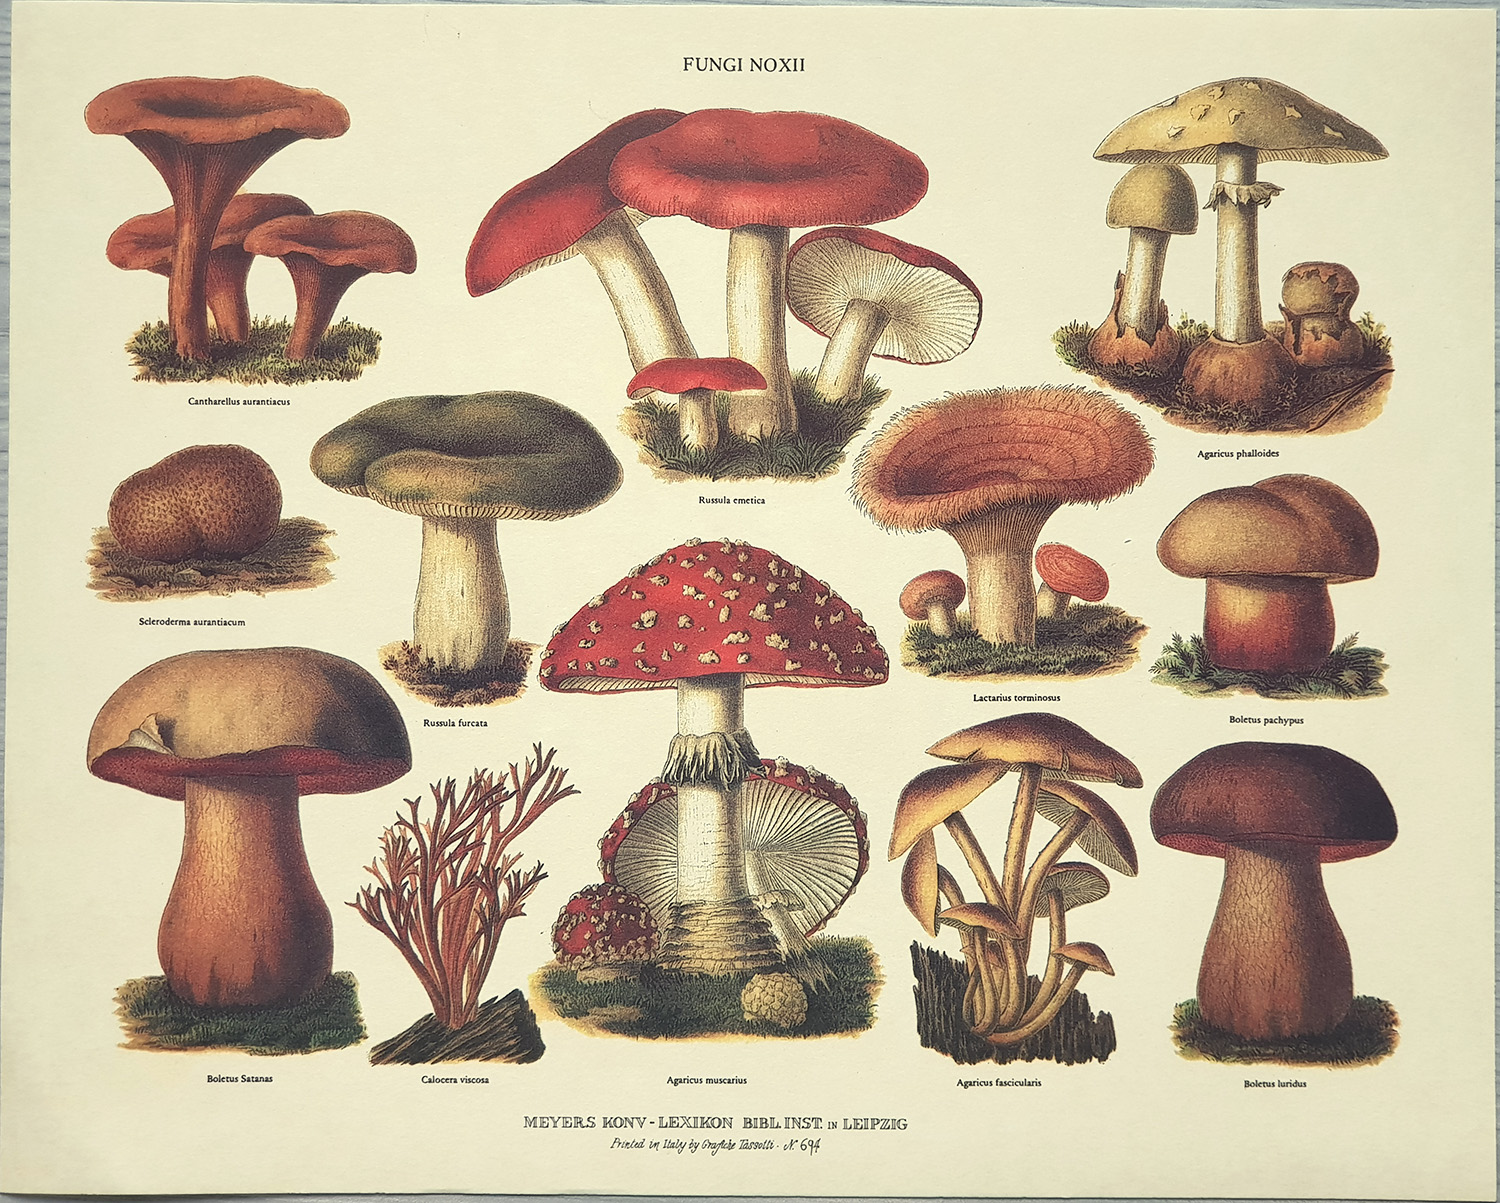 Print: Fungi Noxii - cm 30x24